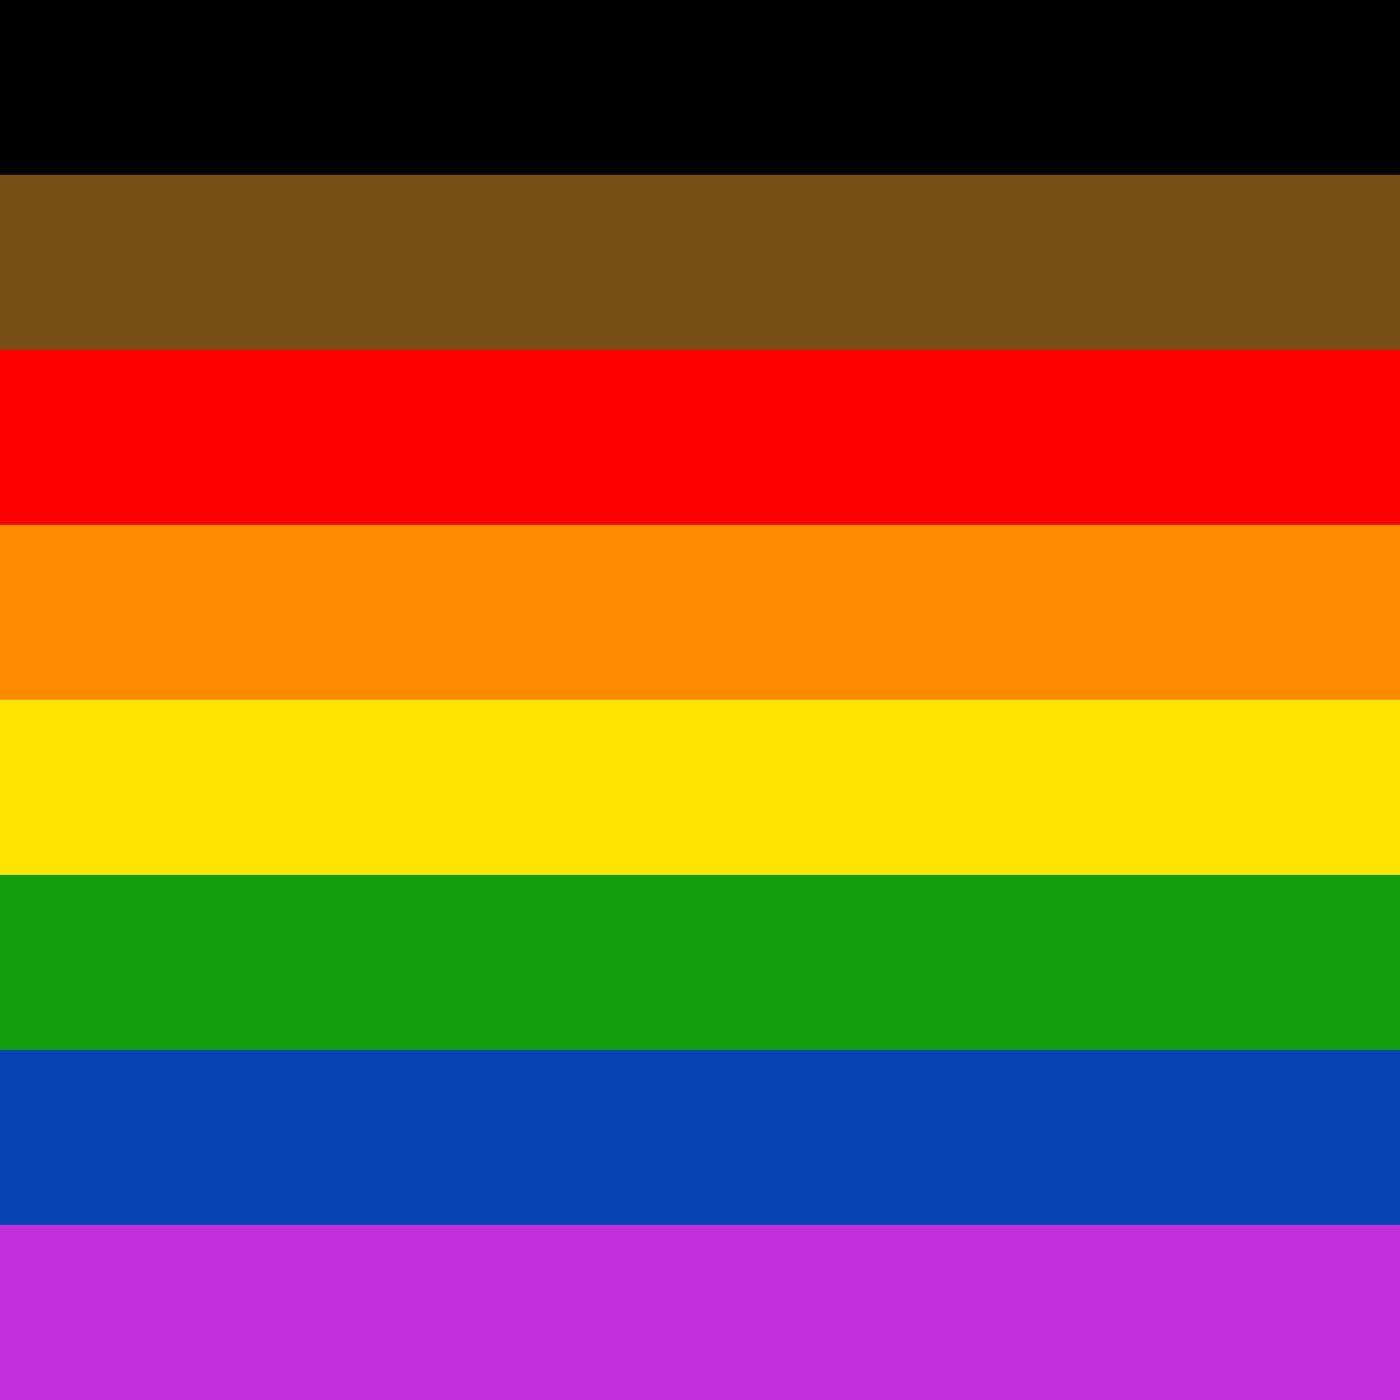 Philadelphia's new, inclusive gay pride flag is making gay white men